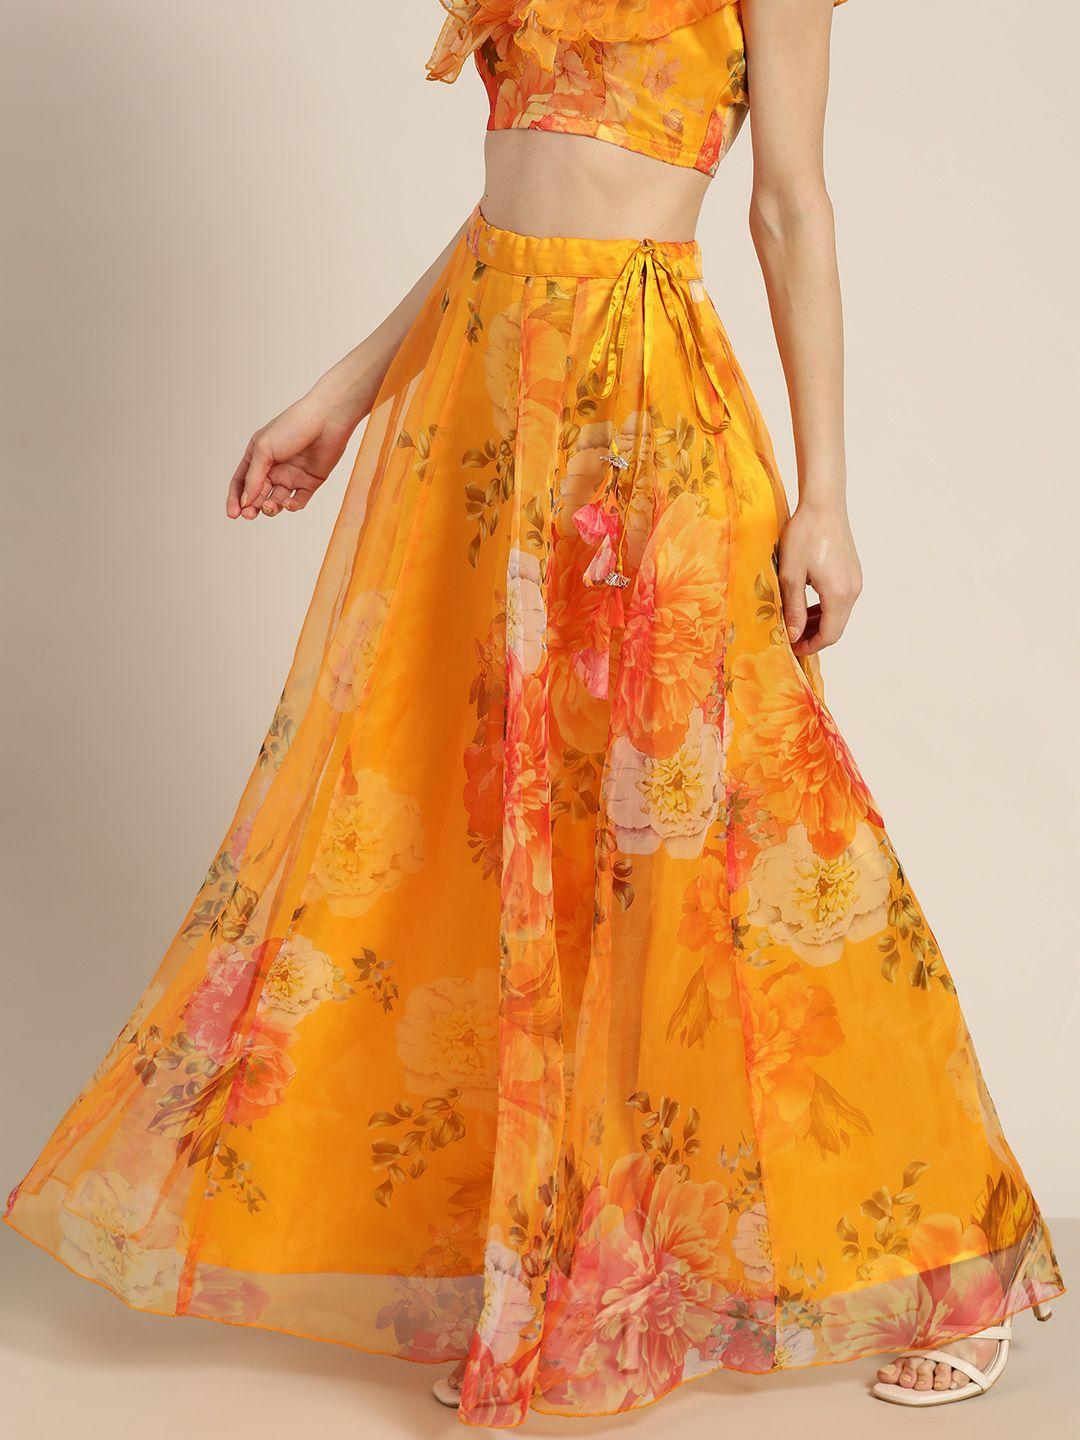 shae-by-sassafras-yellow-floral-organza-anarkali-flared-skirt